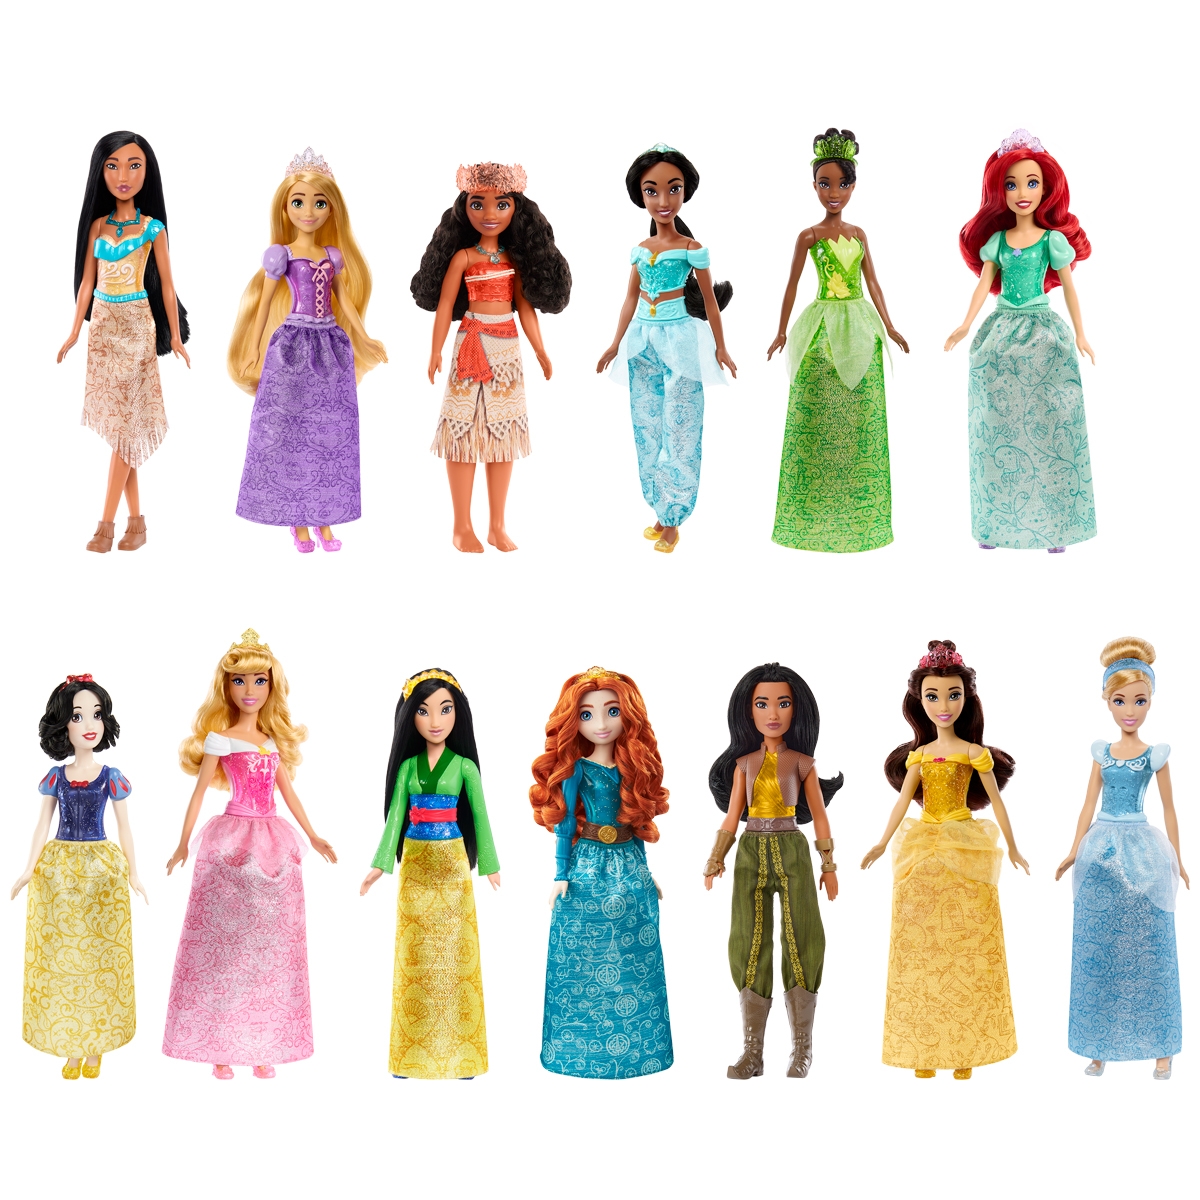 Mattel Unveils Re-Imagined Disney Princess and Disney Frozen Dolls